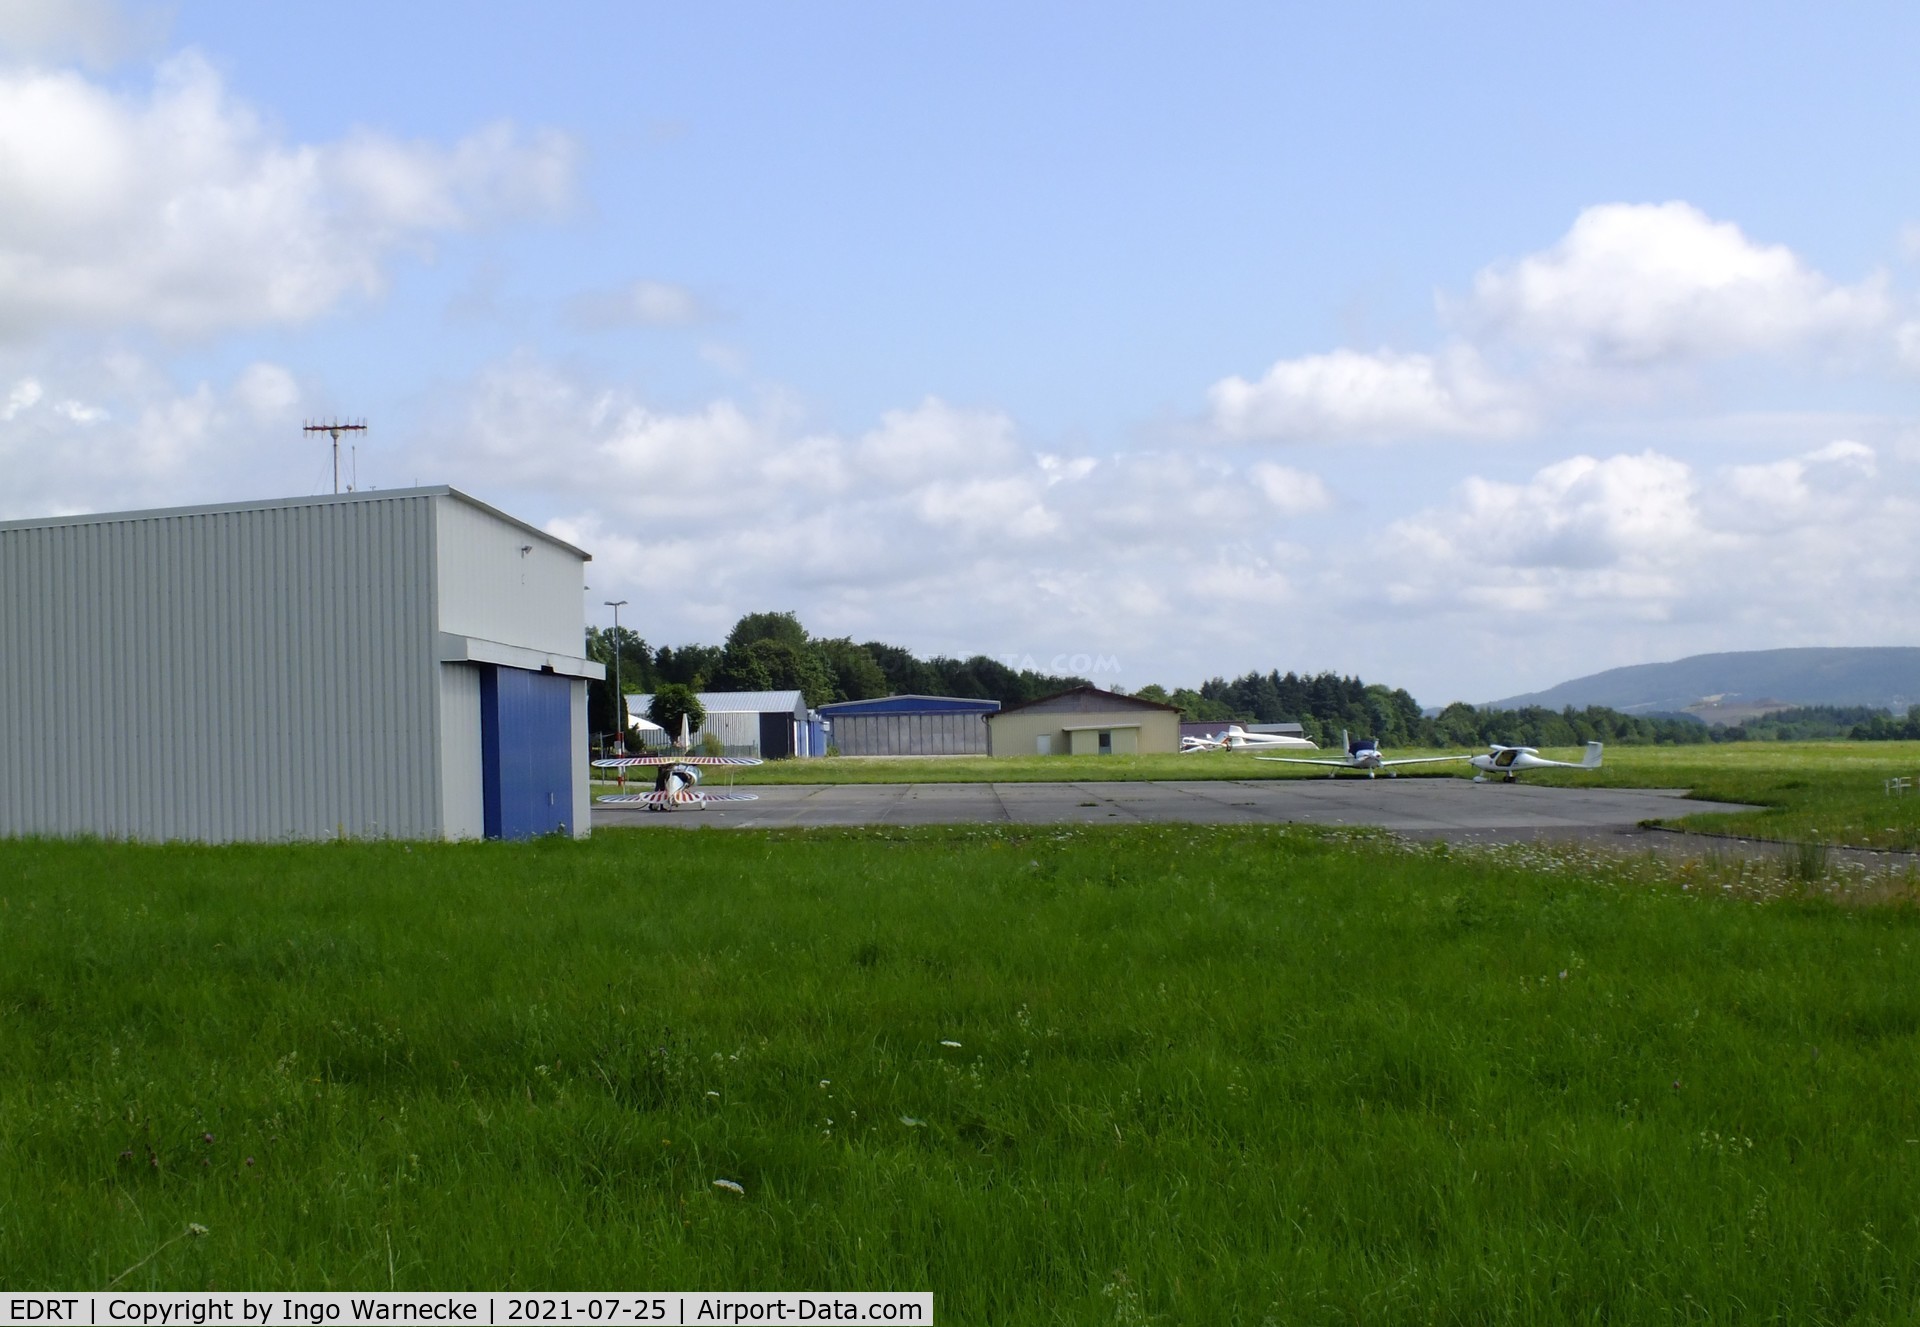 EDRT Airport - hangars and apron at Trier-Föhren airfield